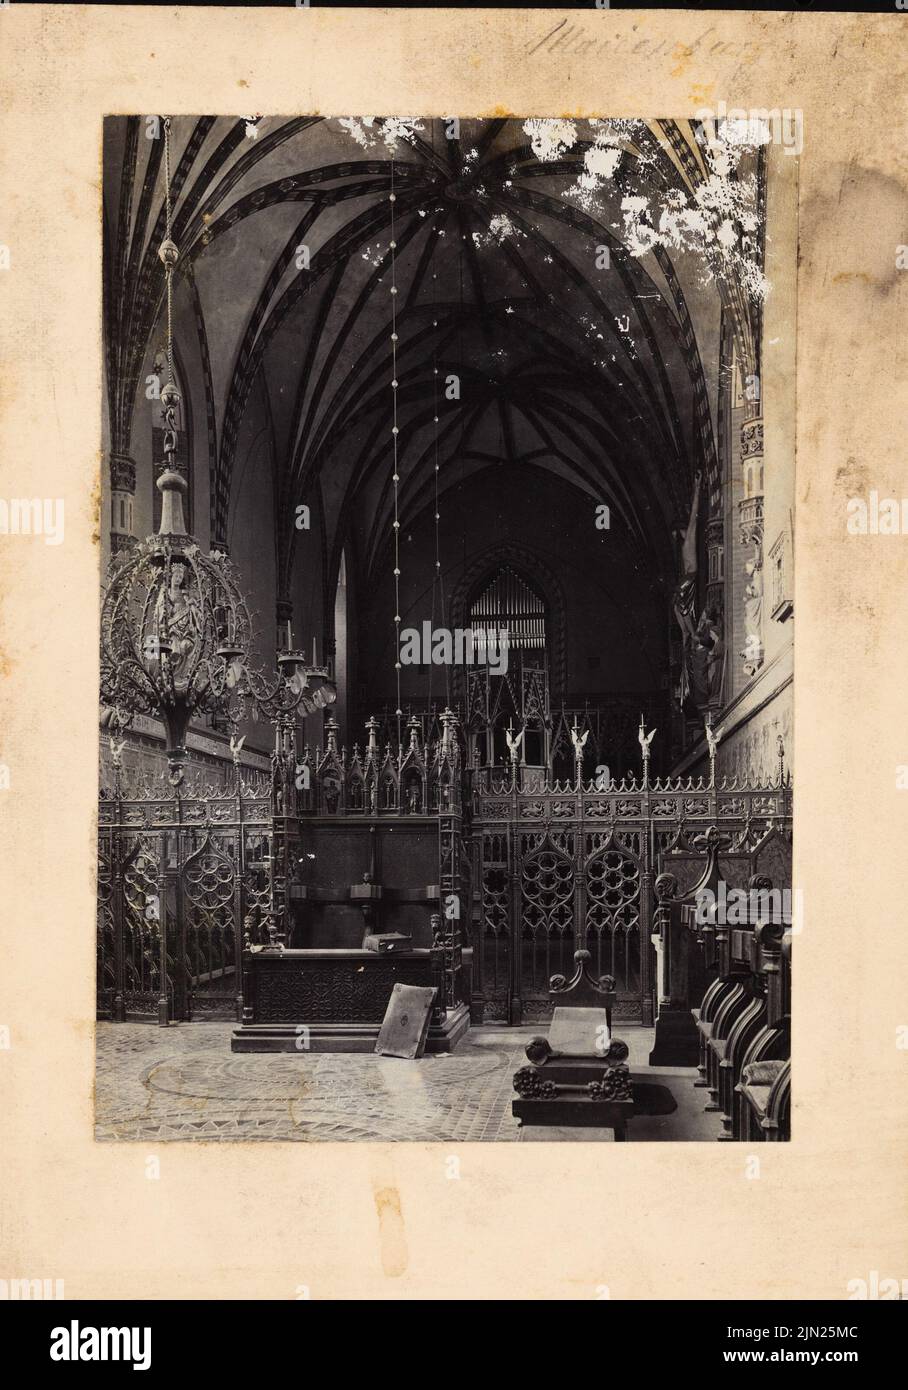 Steinbrecht Conrad (1849-1923), Marienburg, Restoration under Steinbrecht 1882-1918, letters and photos to R. Persius: Interior view Church. Photo on cardboard, 16.5 x 11.5 cm (including scan edges) Stock Photo